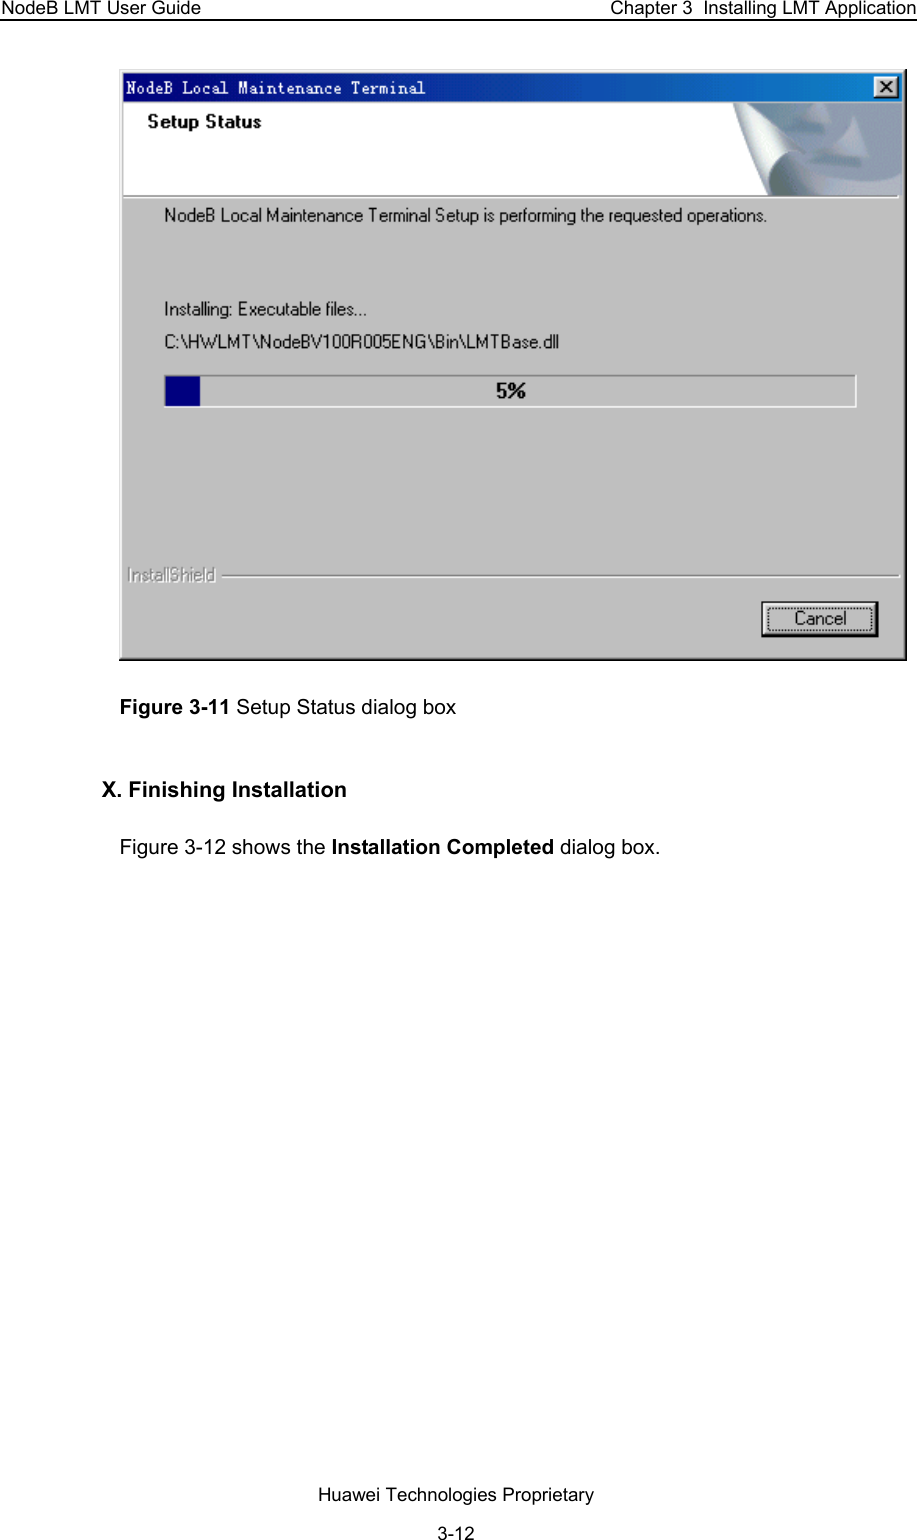 NodeB LMT User Guide  Chapter 3  Installing LMT Application  Figure 3-11 Setup Status dialog box  X. Finishing Installation  Figure 3-12 shows the Installation Completed dialog box.  Huawei Technologies Proprietary 3-12 